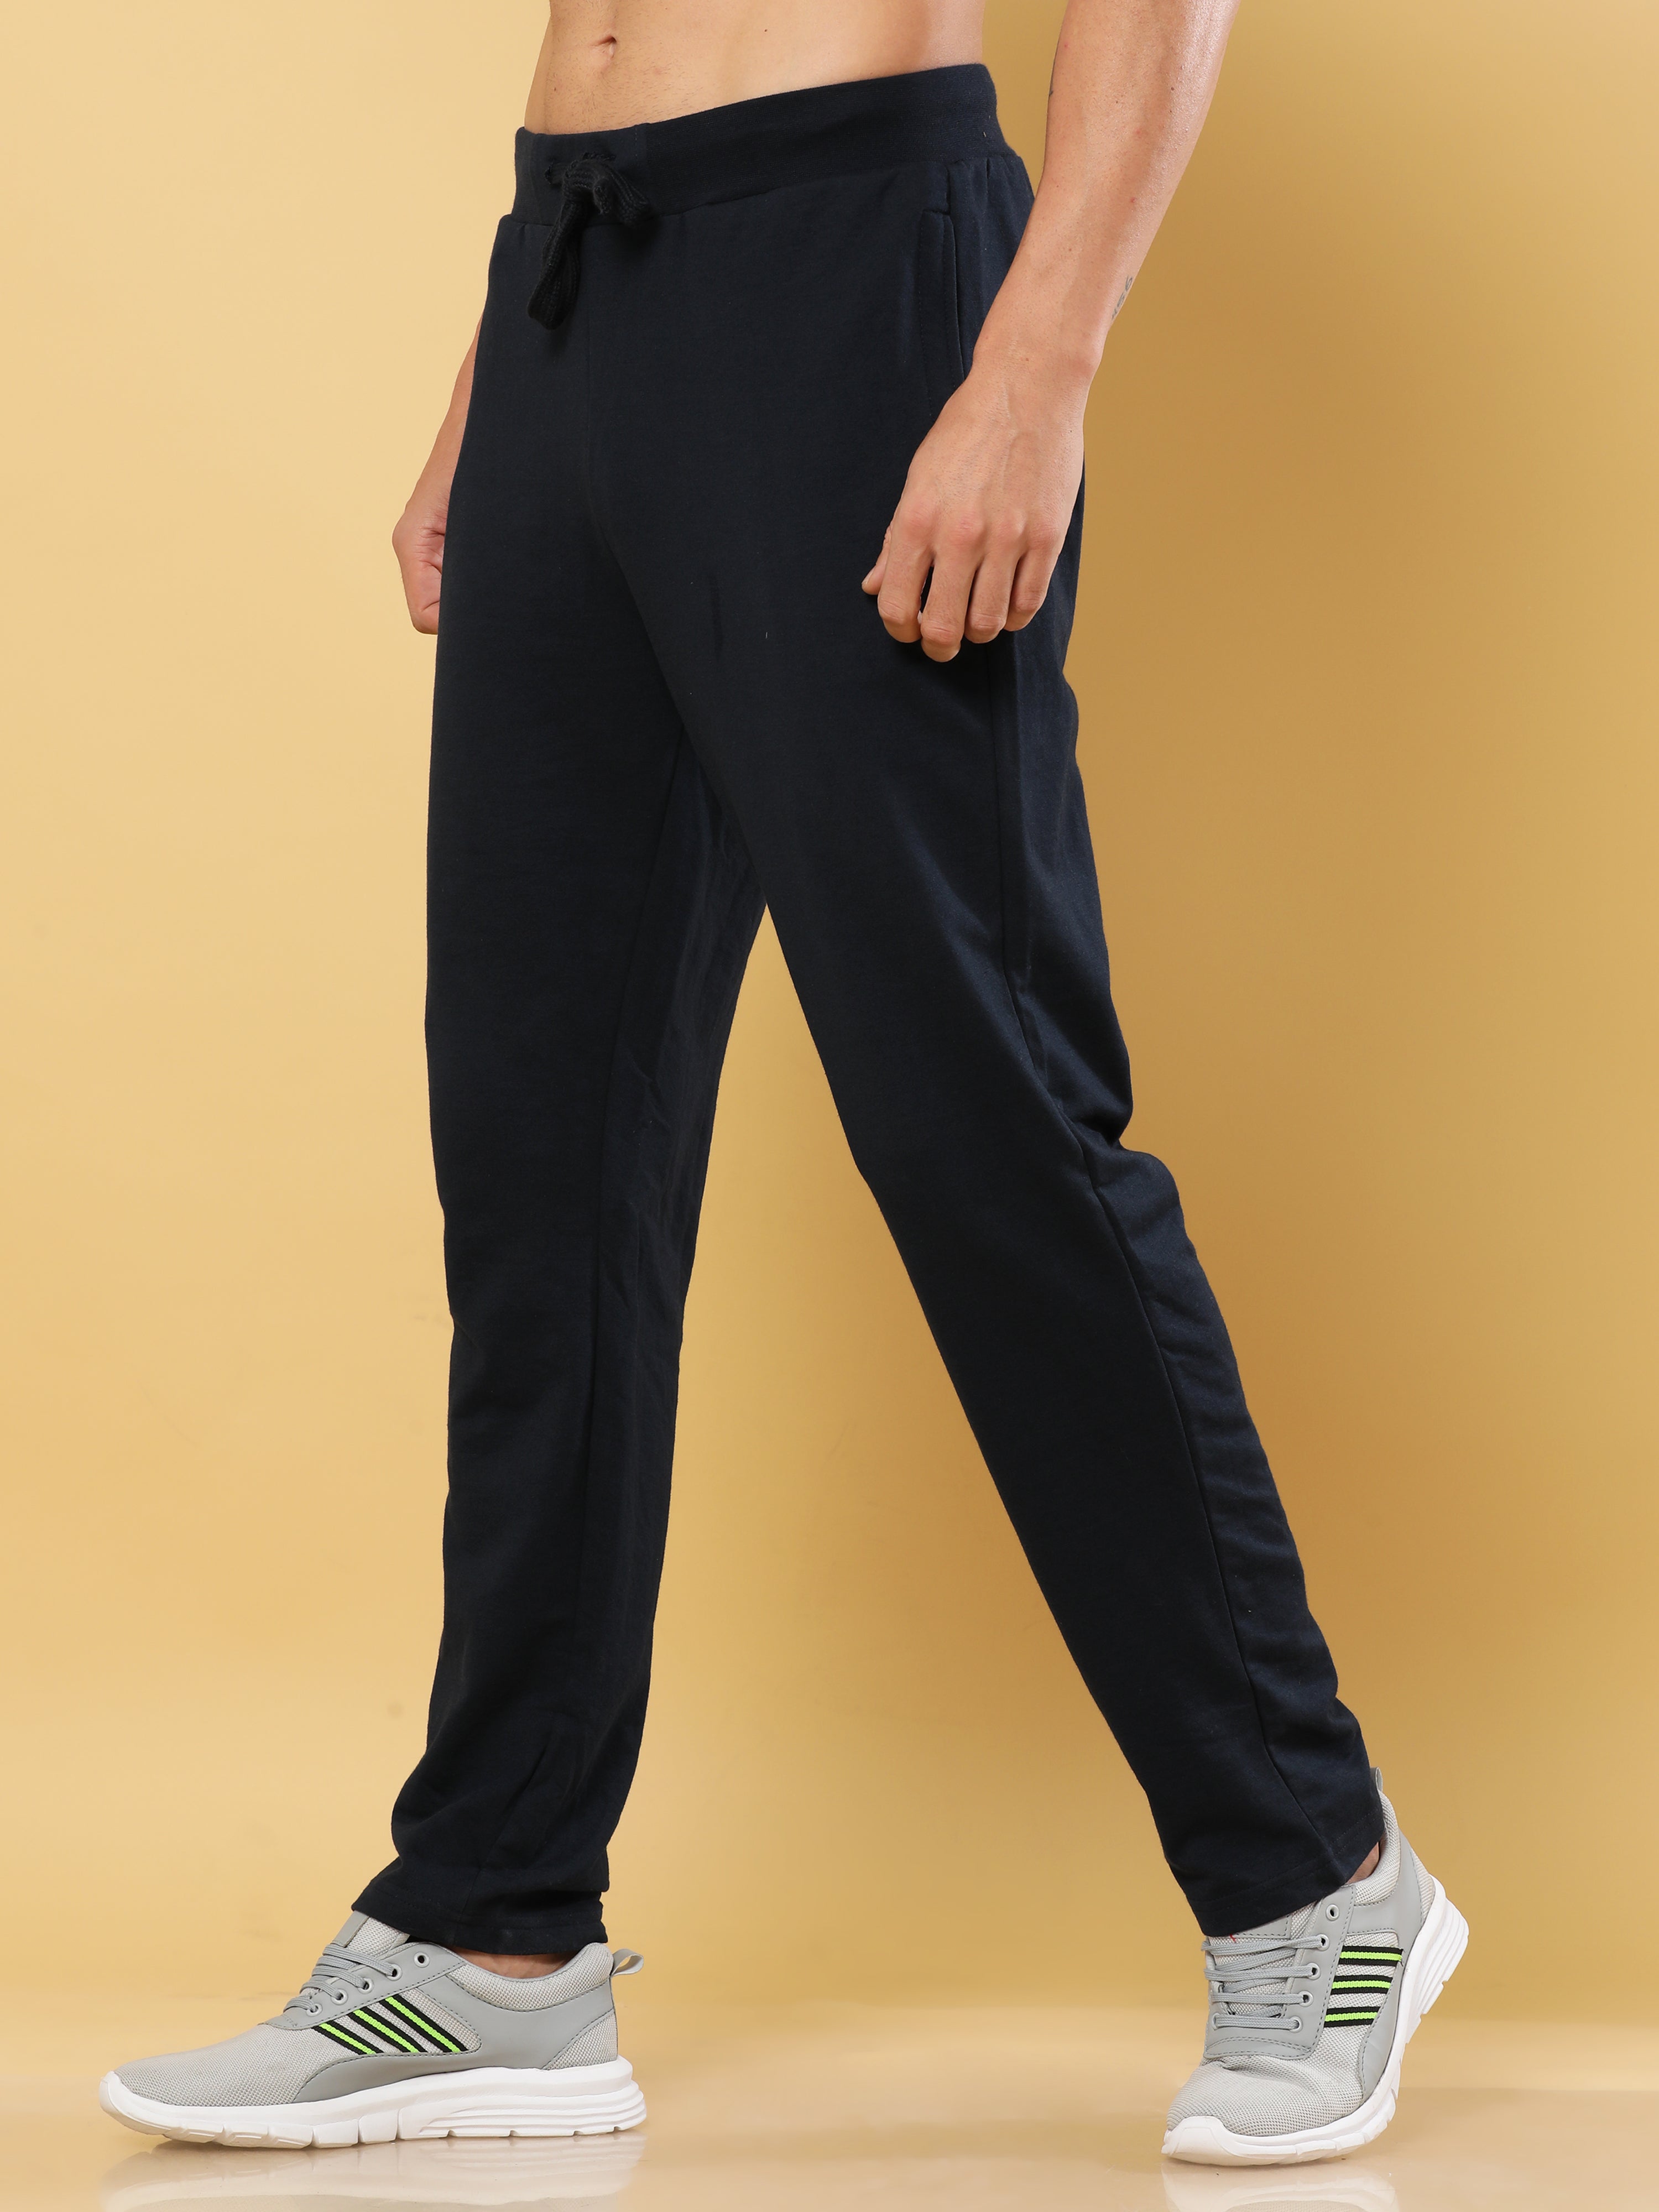 Cozy Plannel Plaid Cotton Pocket Wide Leg Pajama Lounge Pants – TheMogan